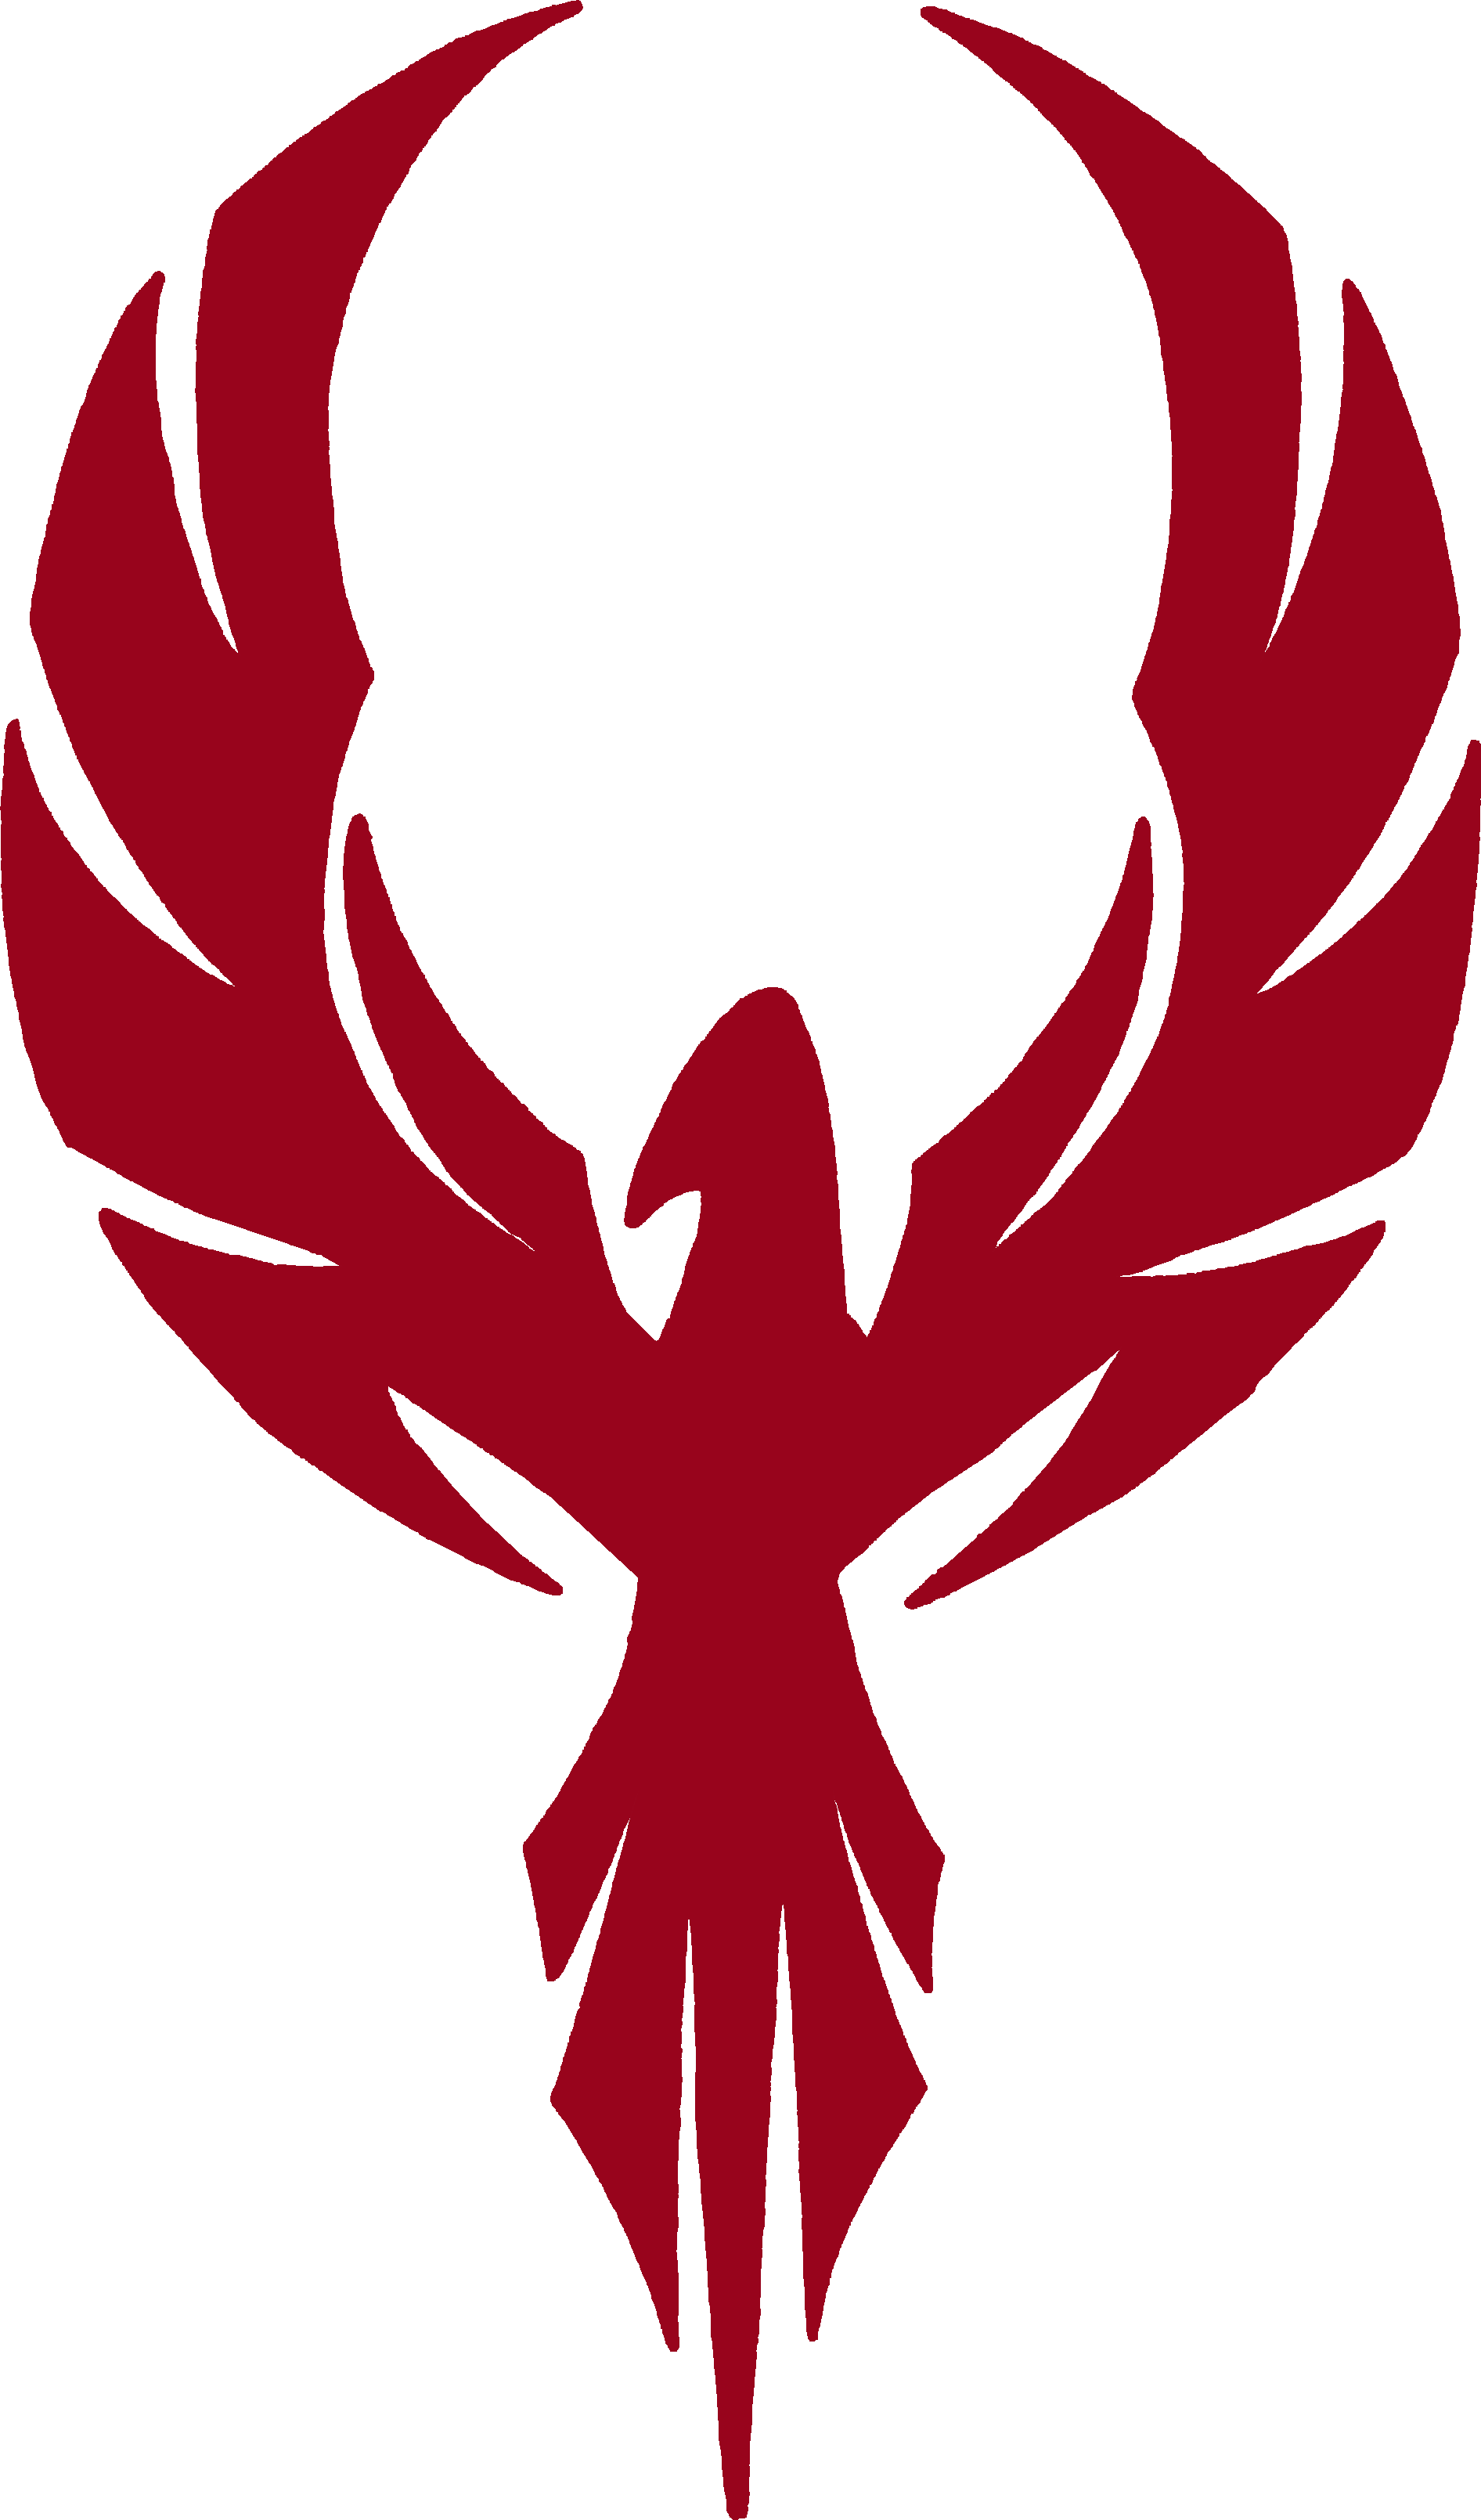 Red Phoenix Logo - Tribal Phoenix - rebellion symbol. Spray-painted on the crumbled ...